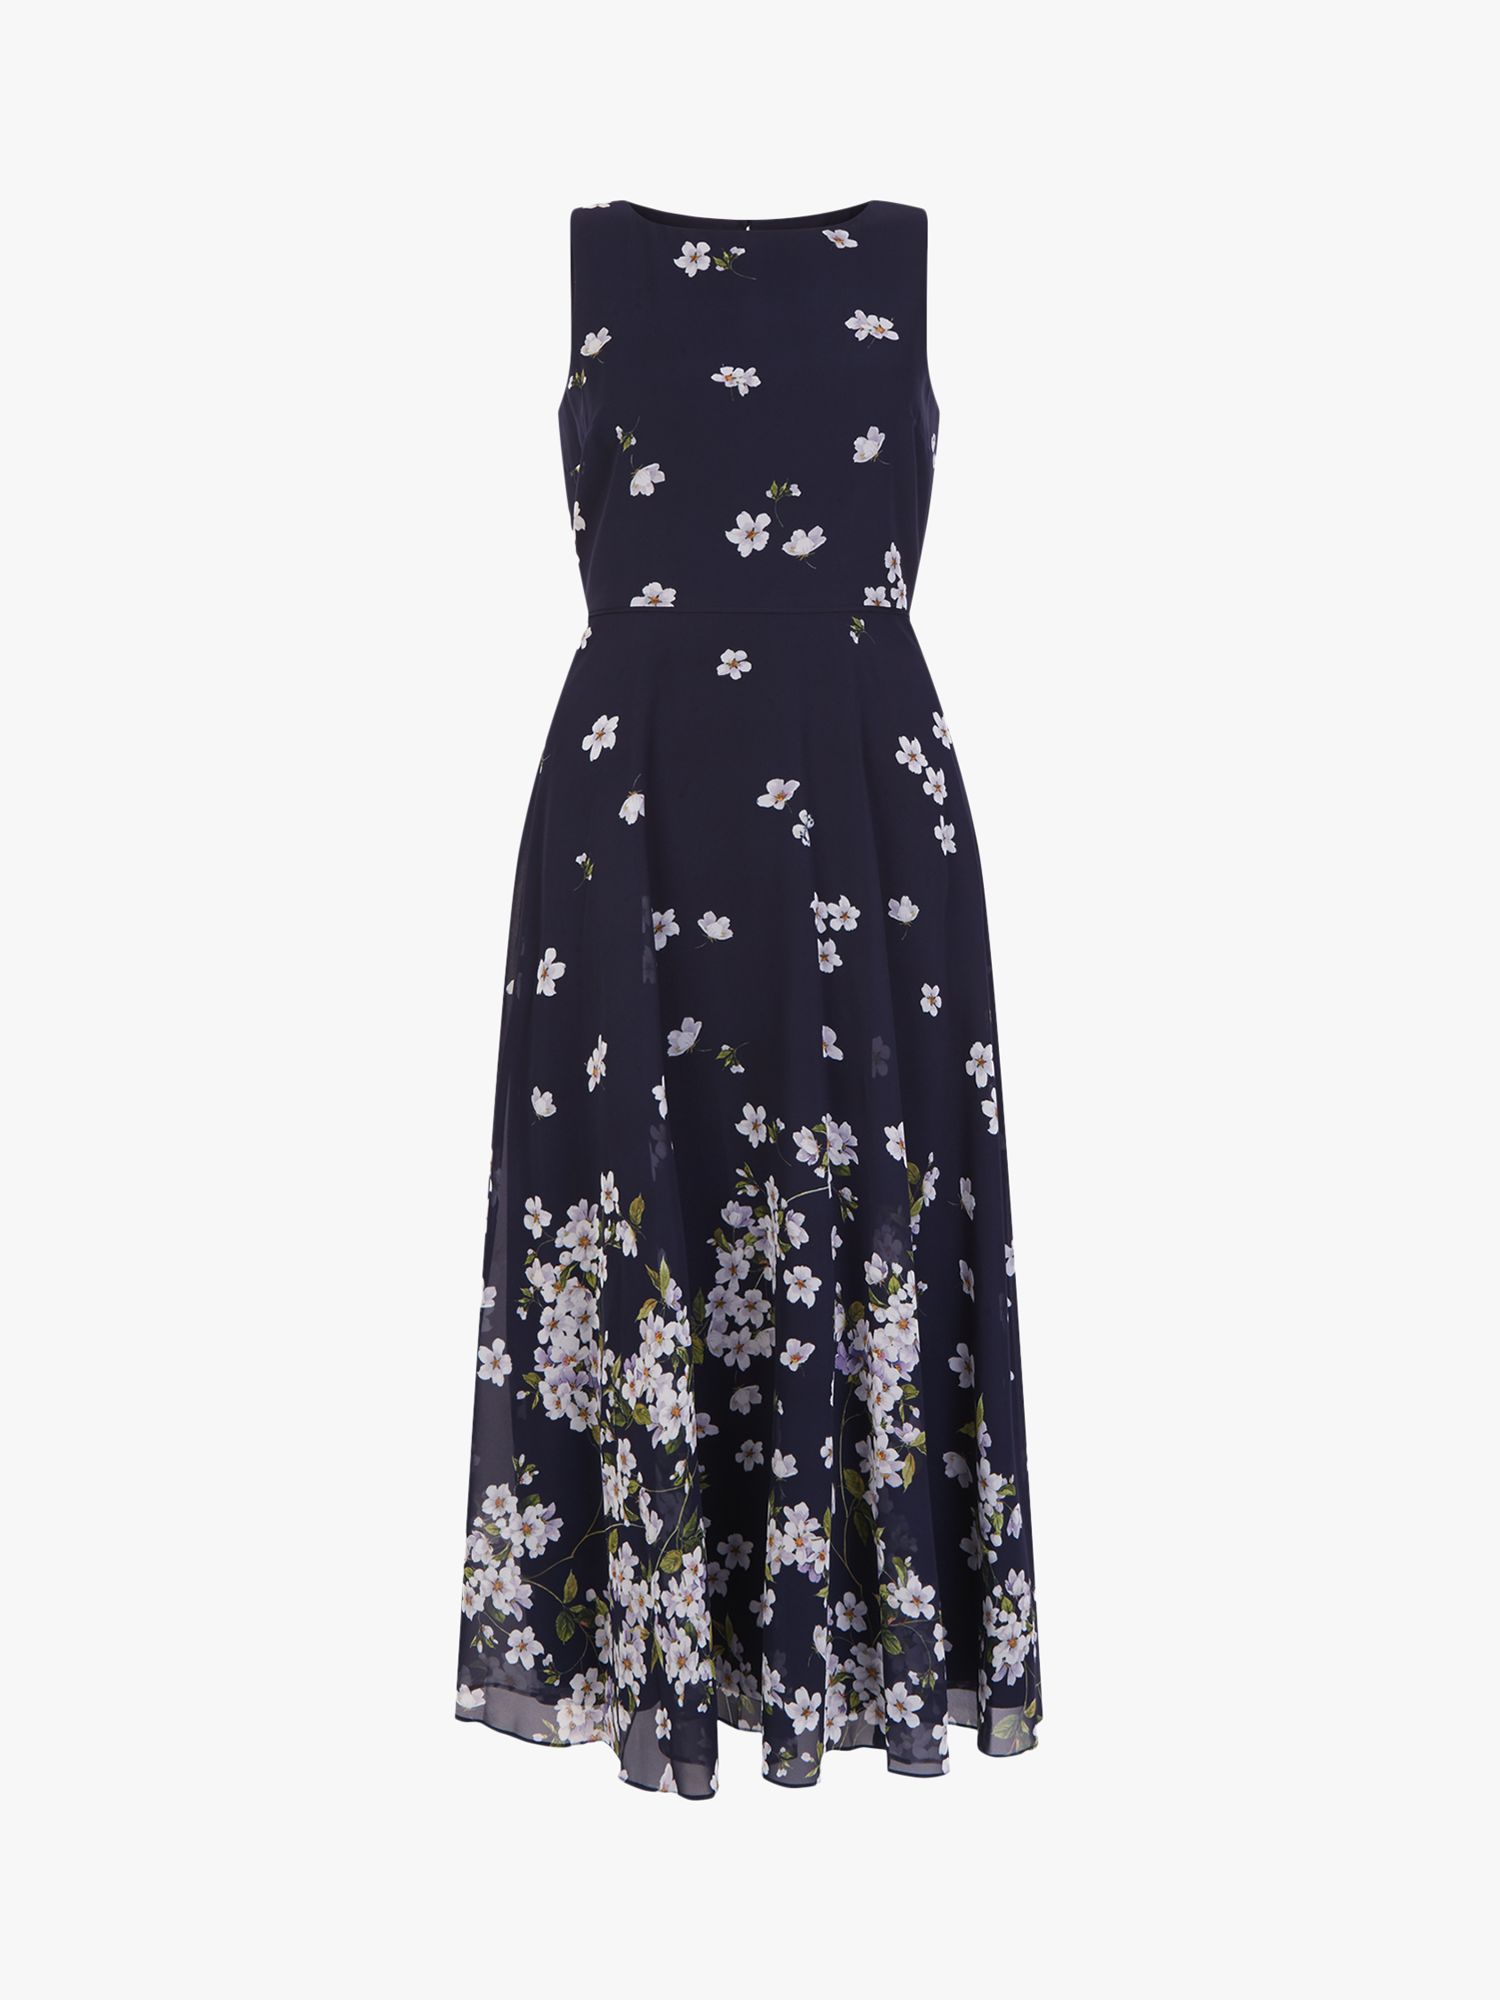 Hobbs Carly Floral Print Dress, Midnight/Ivory, 10